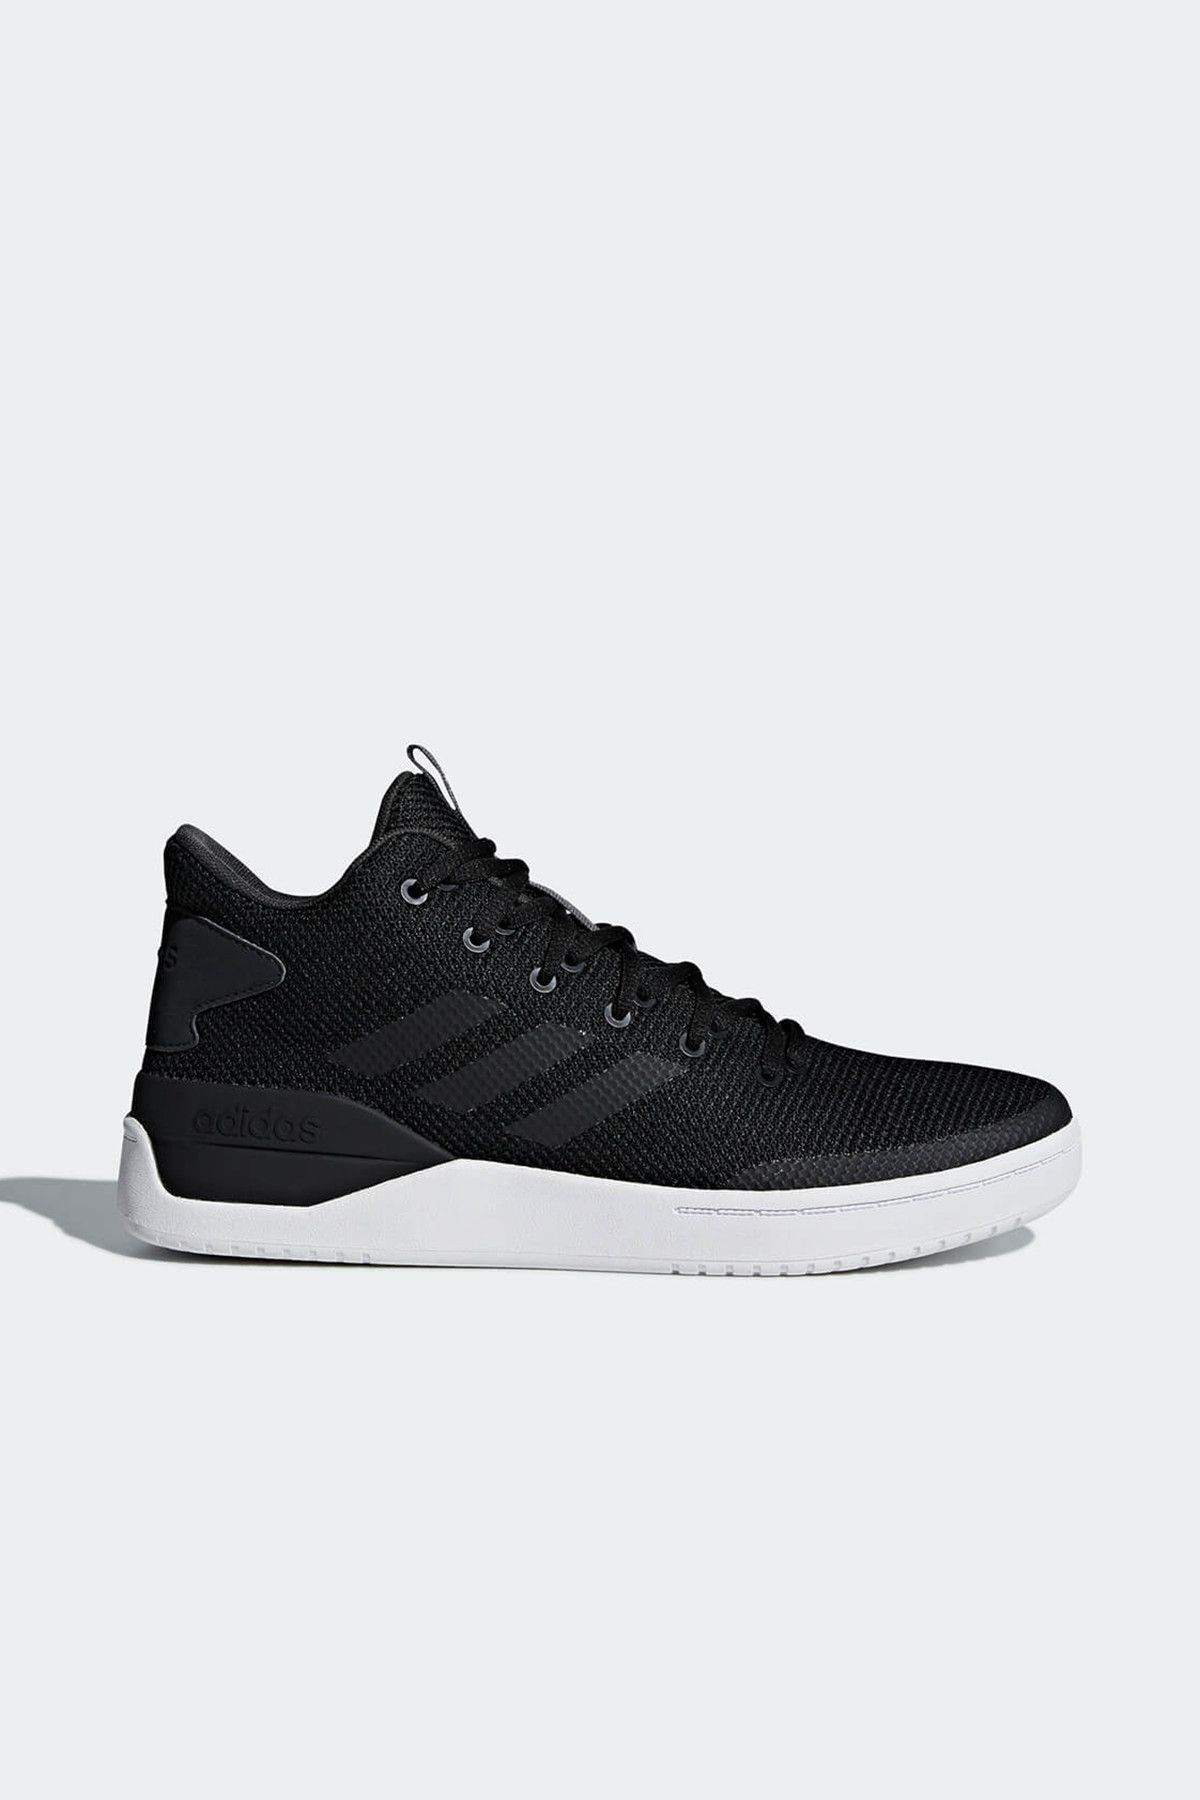 adidas Bball80s Siyah GRI Erkek Basketbol Ayakkabısı 100350571